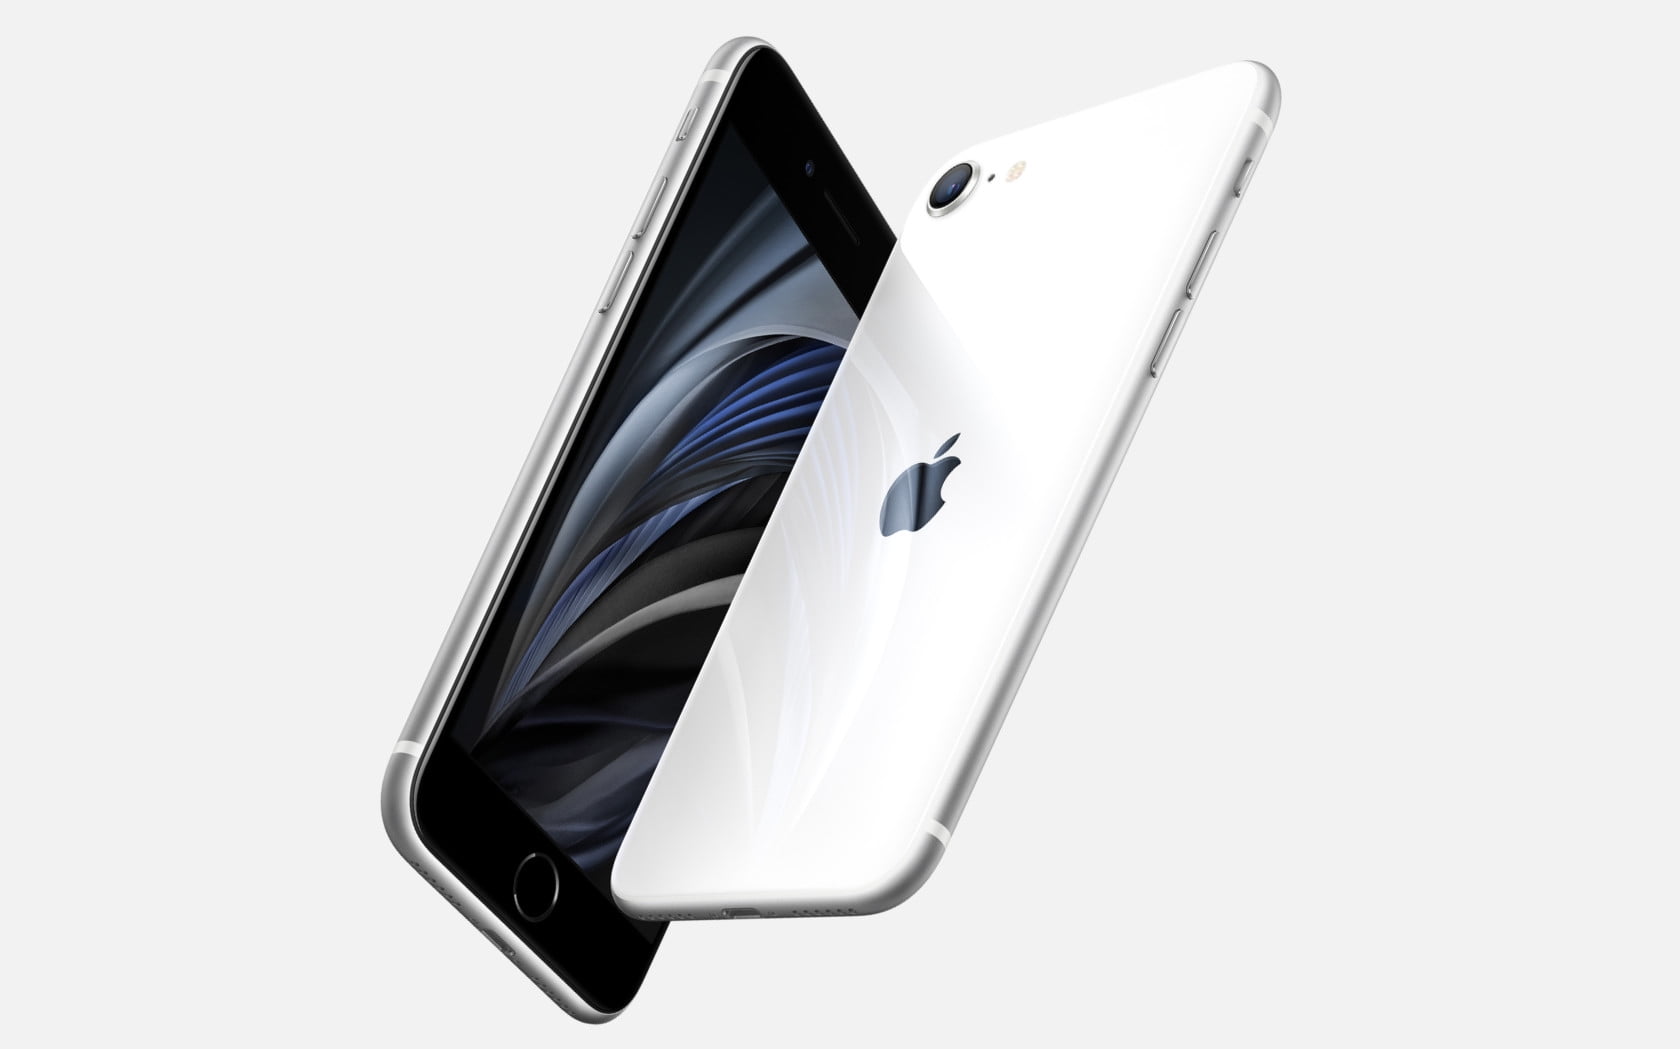 Refurbished Apple iPhone SE (2nd Gen) 64GB - Locked Sprint White 